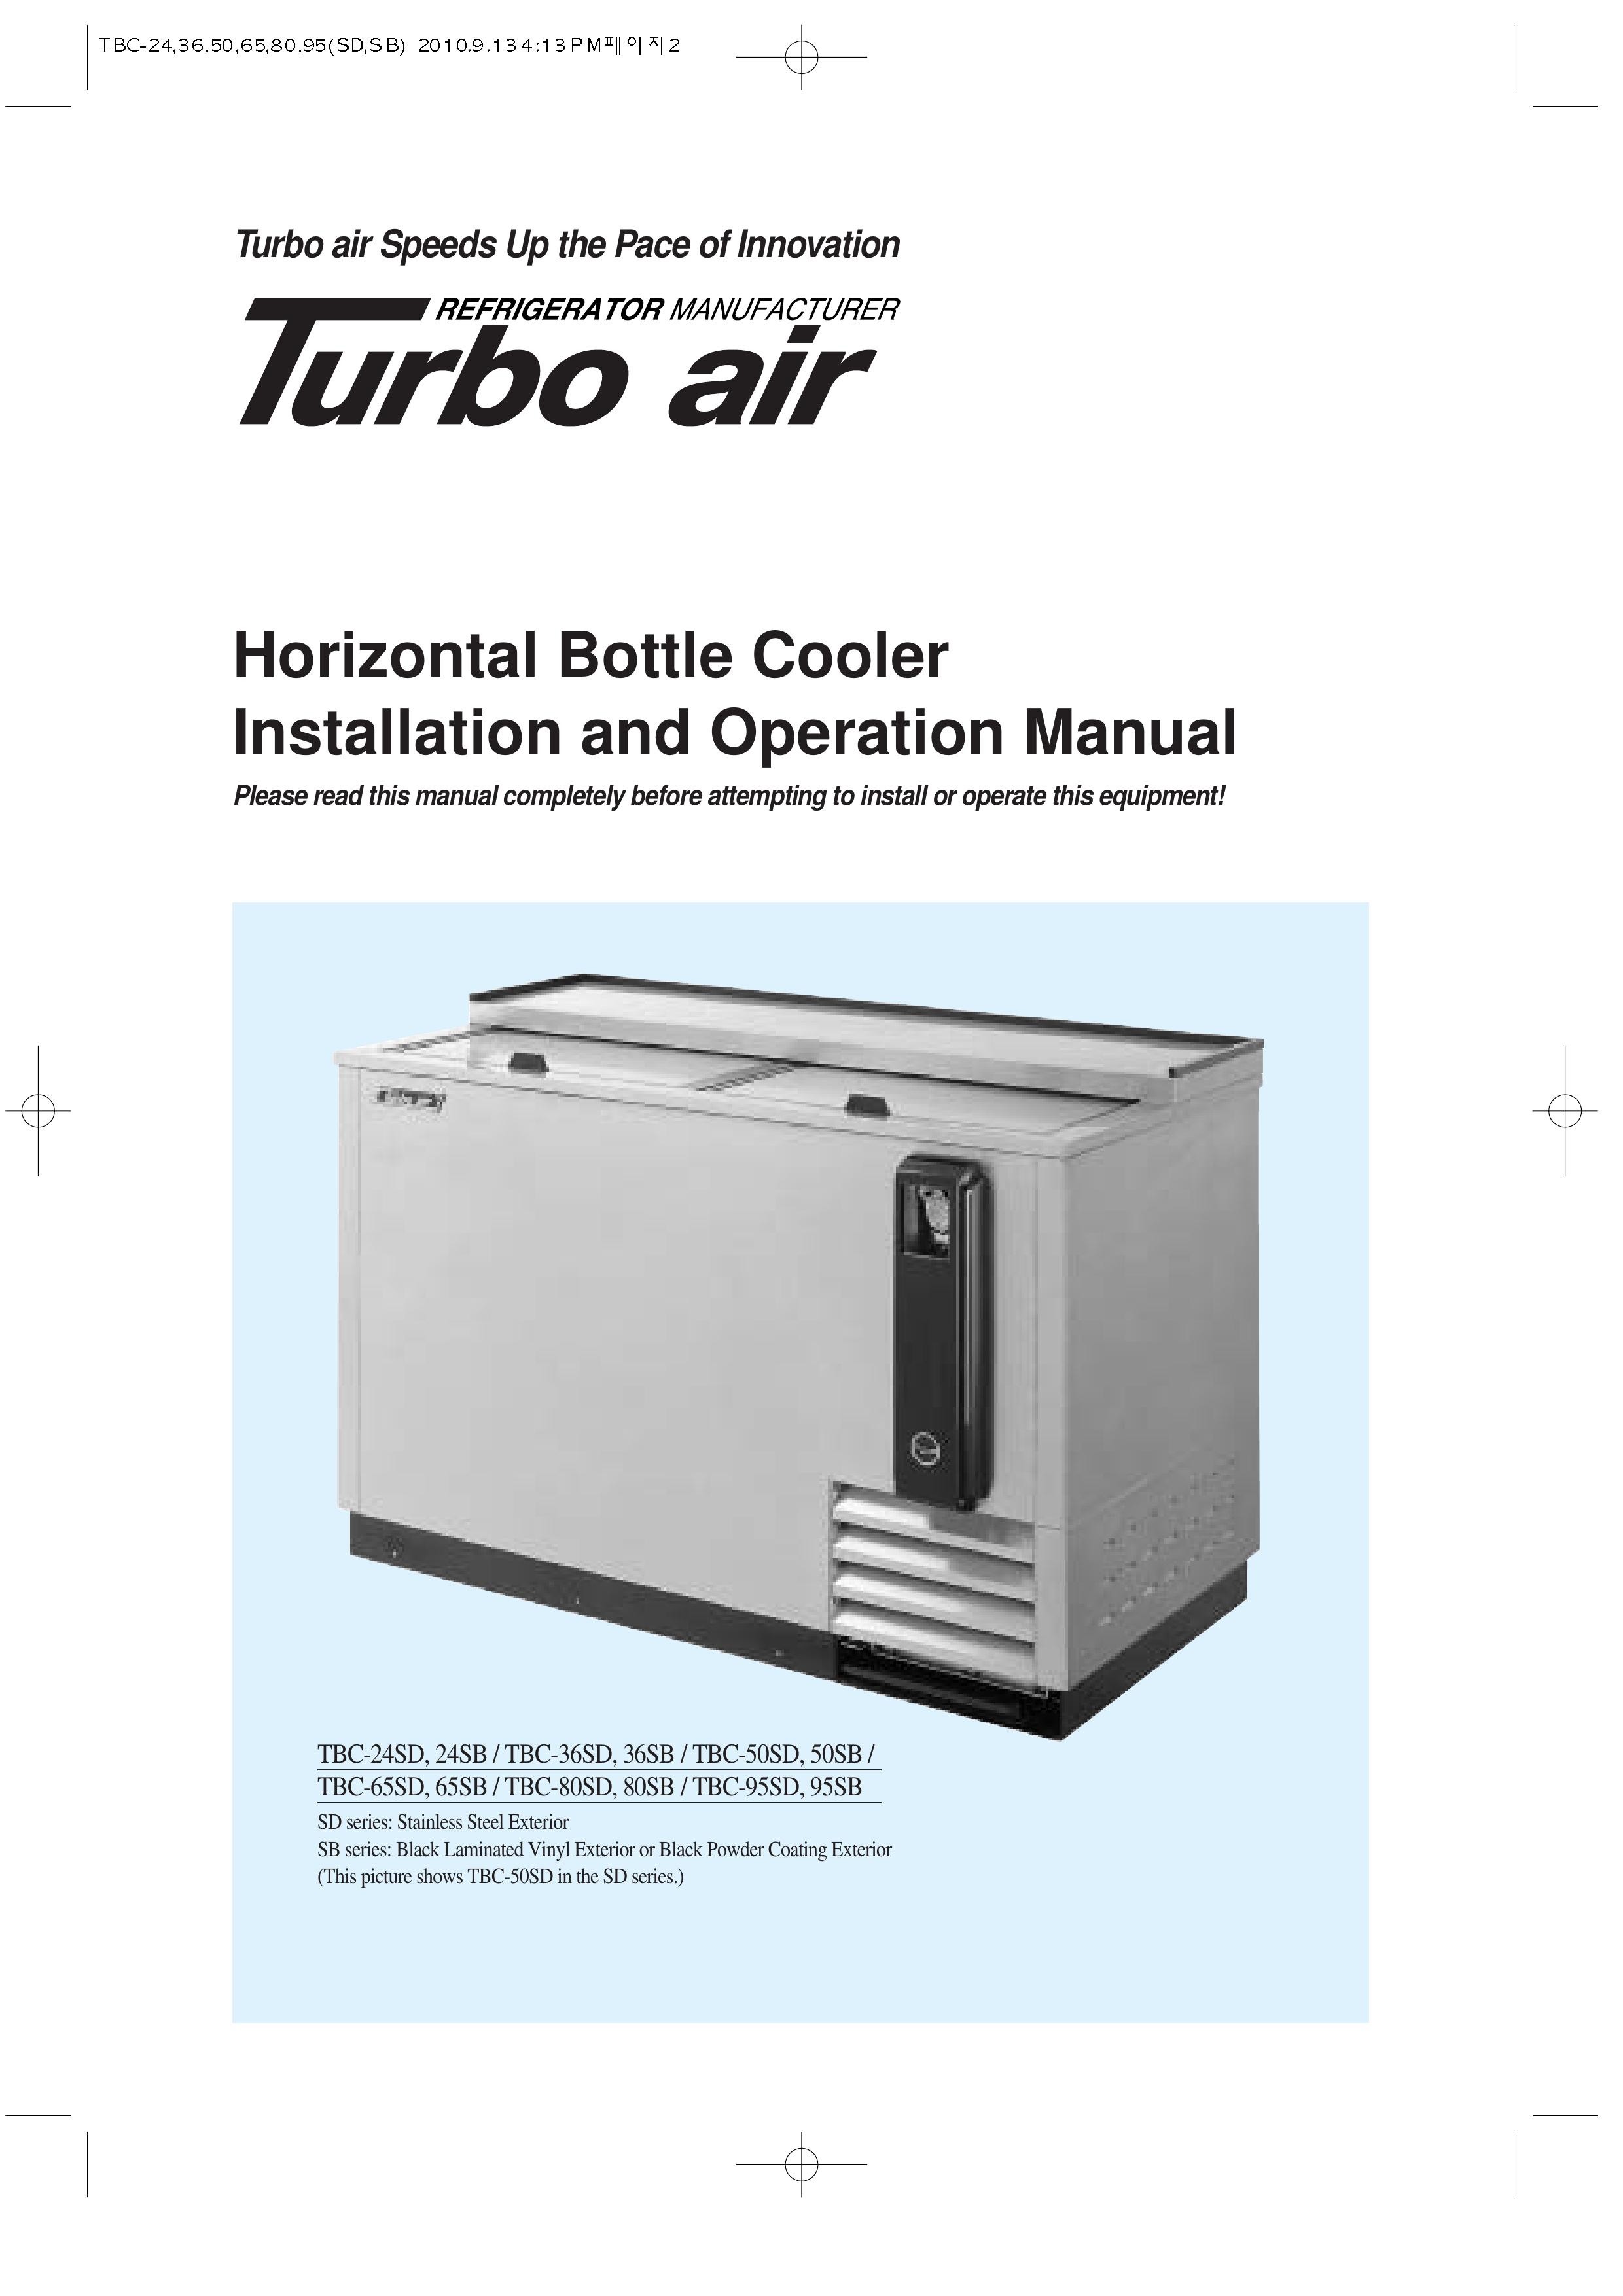 Turbo Air TBC-95SD, 95SB Refrigerator User Manual